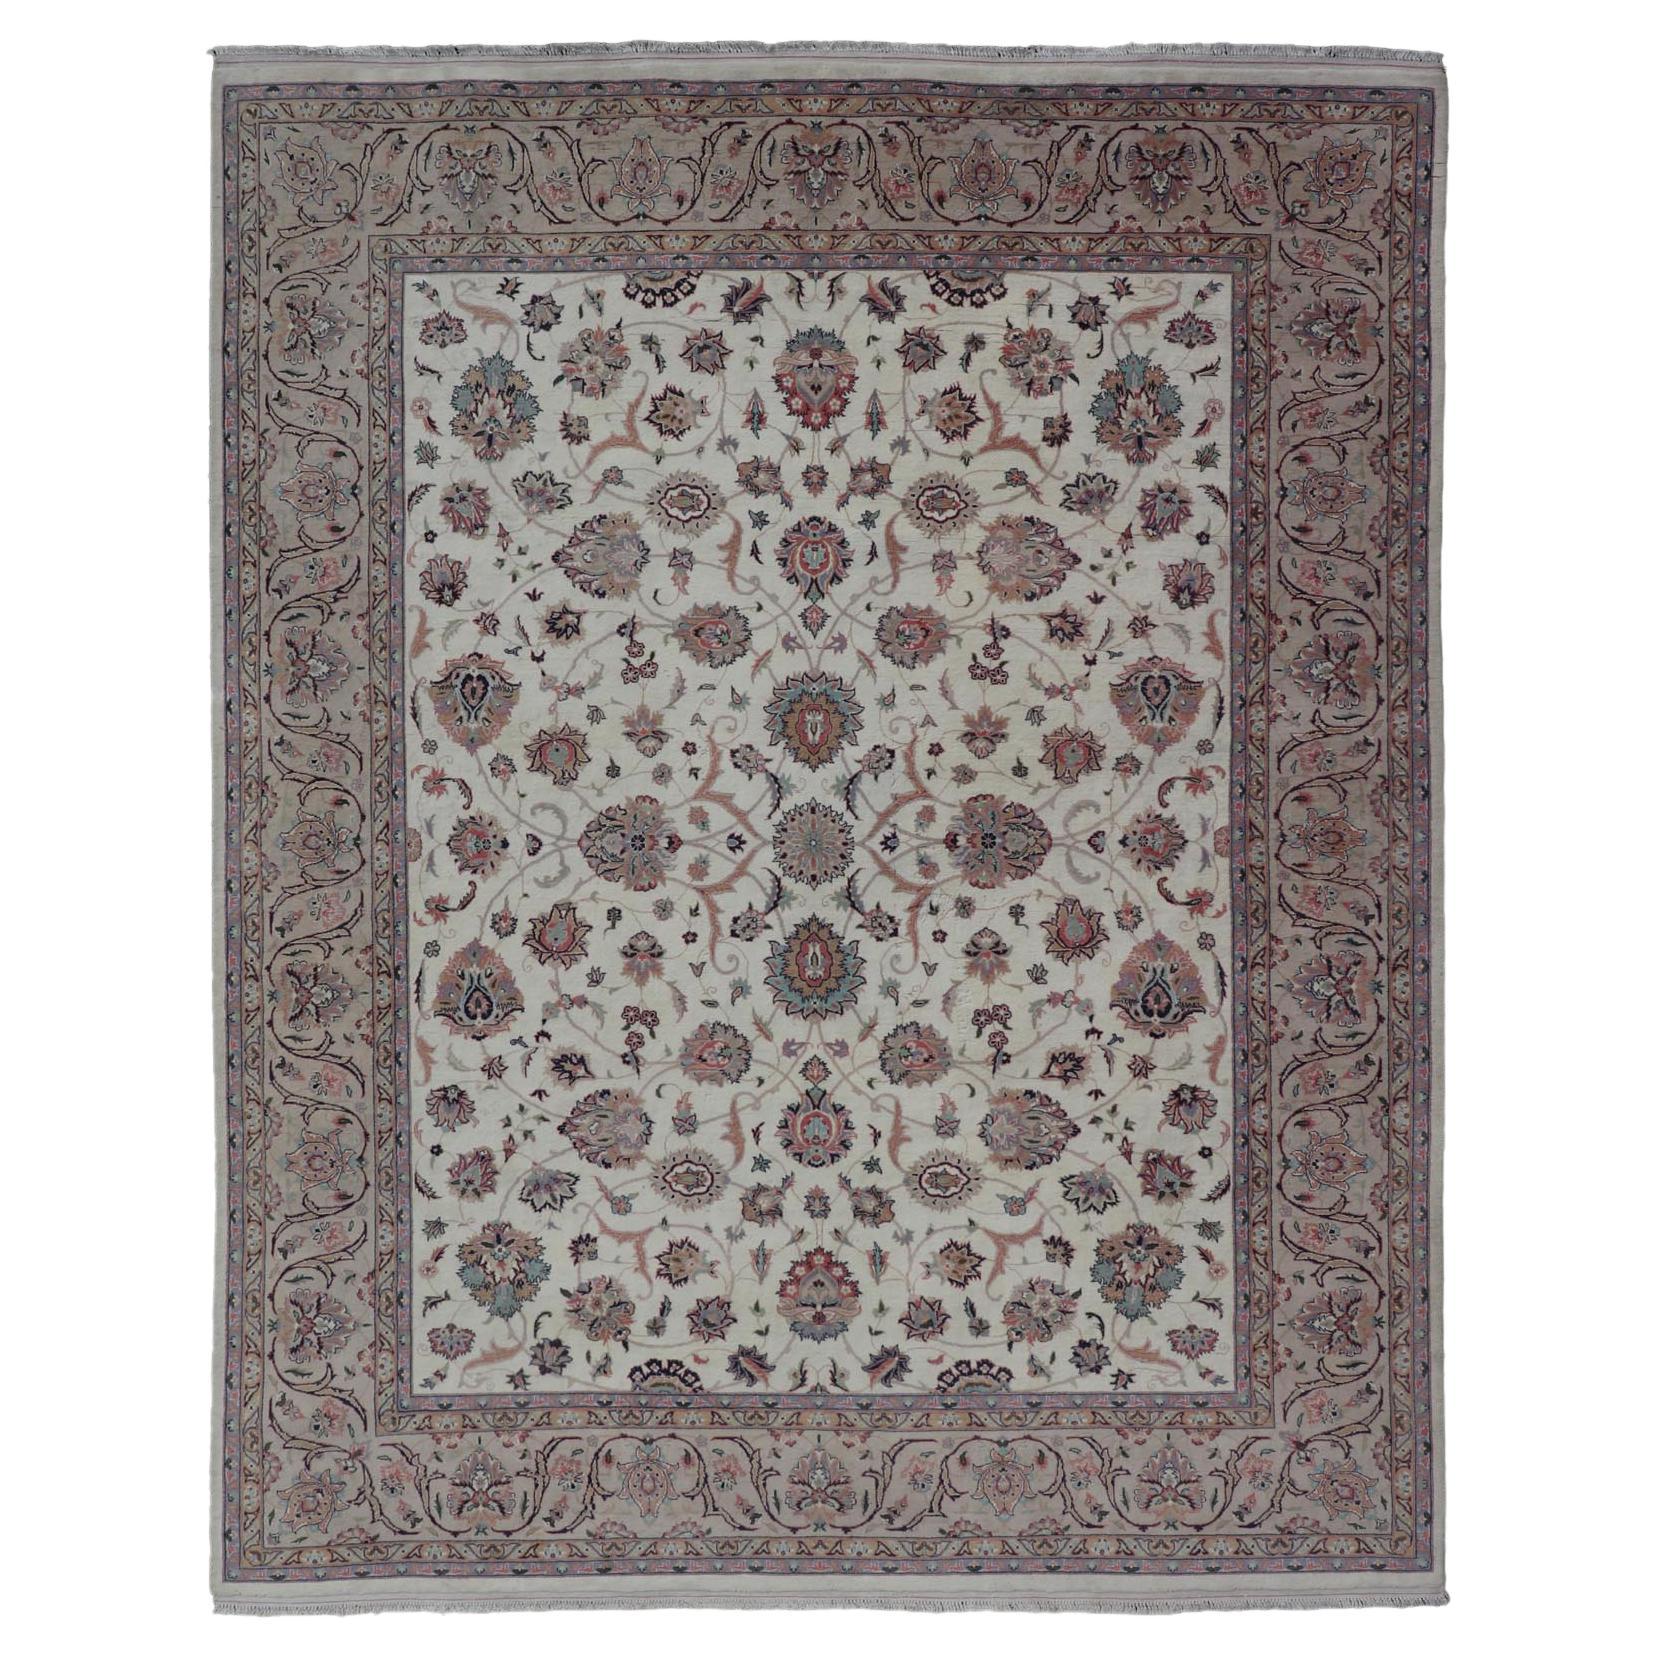 All-Over Floral Design Vintage Persian Tabriz Rug in Soft Colors on Ivory Field  For Sale